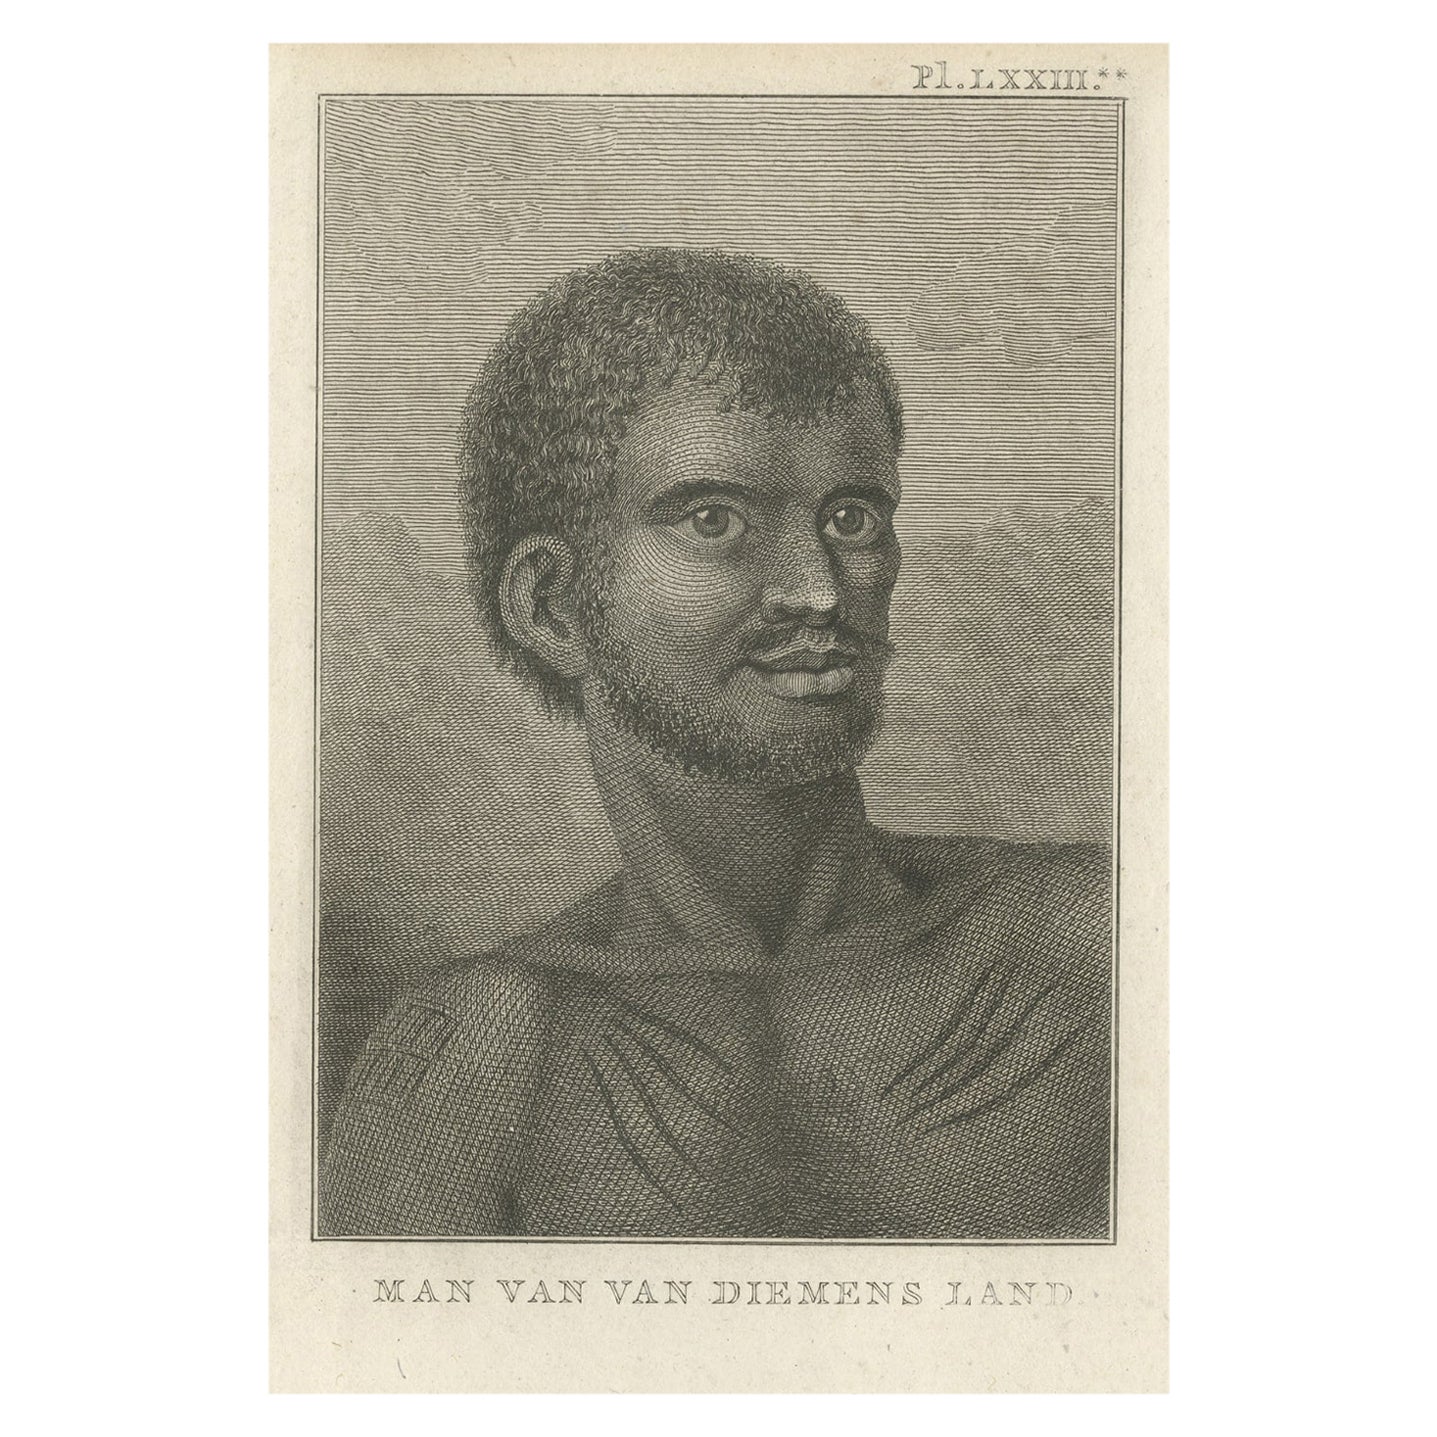 Impression ancienne d'un aborigène autochtones de la terre de Van Dieman, Australie, 1803